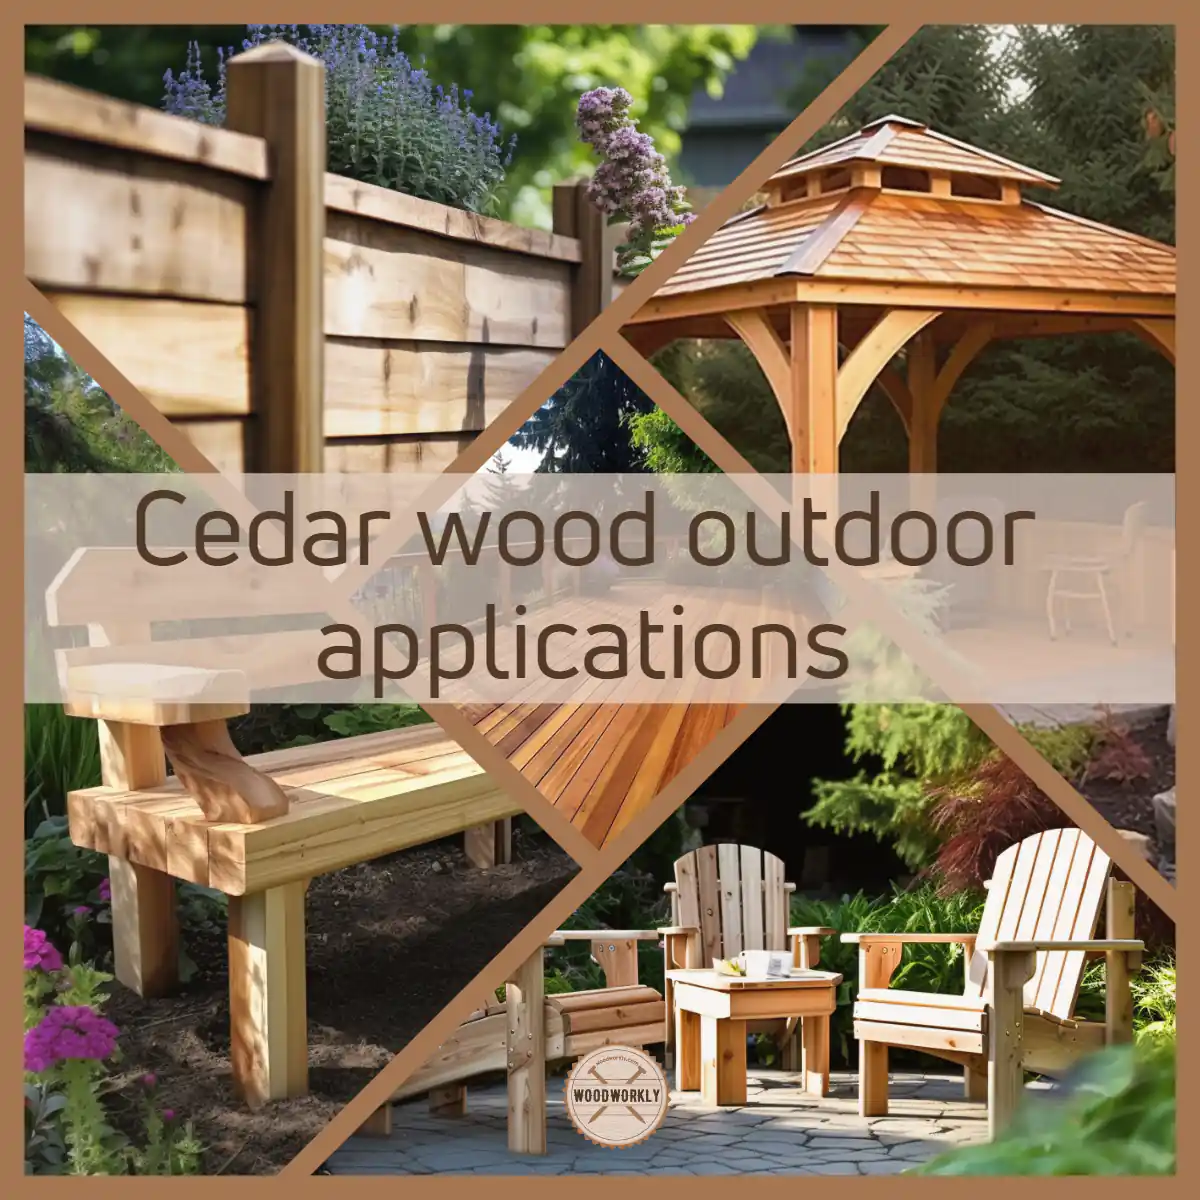 Cedar wood outdoor applications